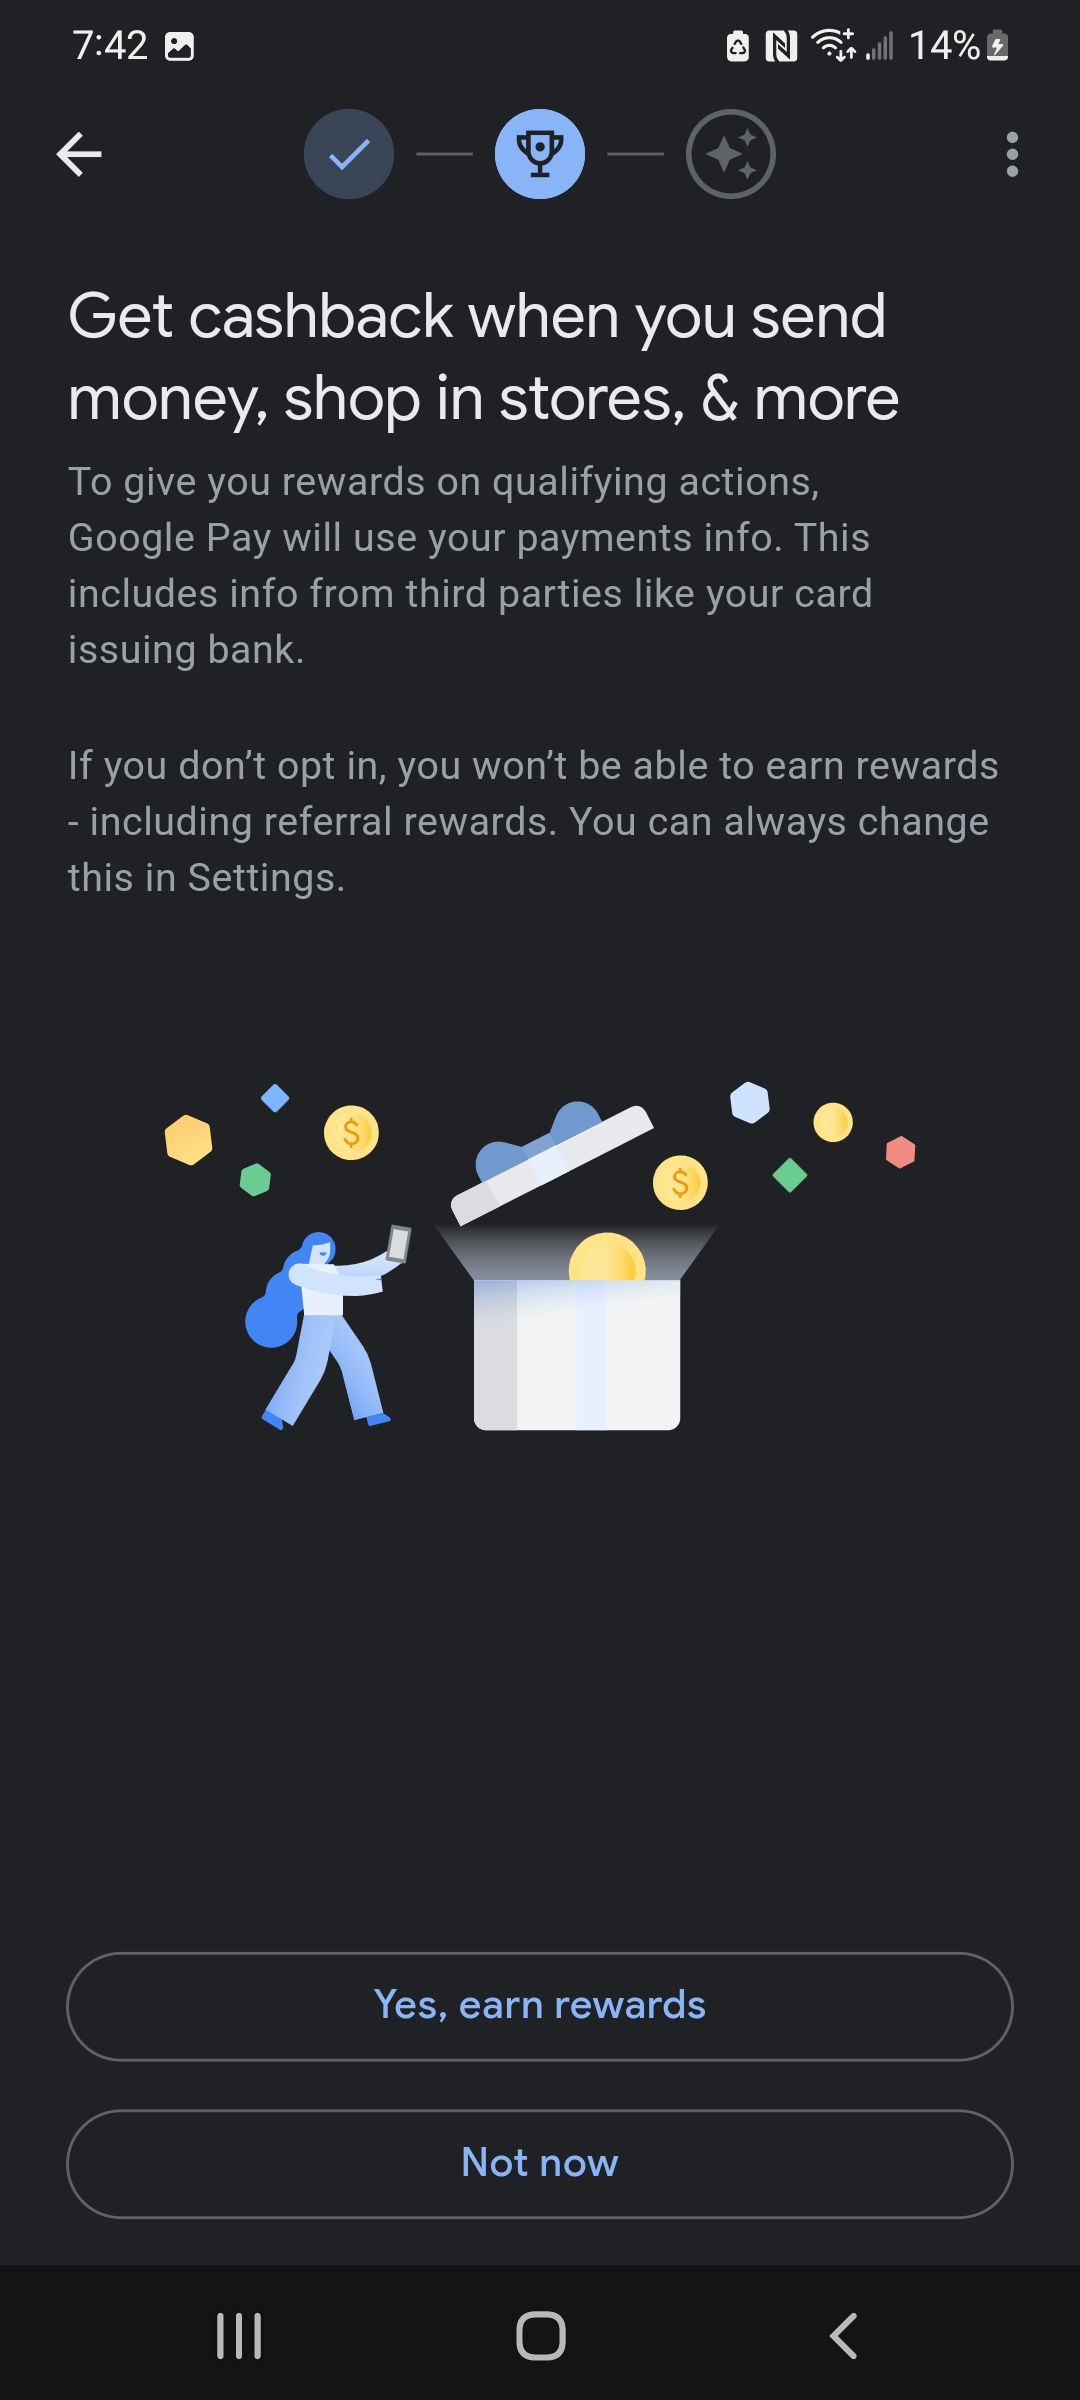 Google Pay request to set-up cashback rewards.